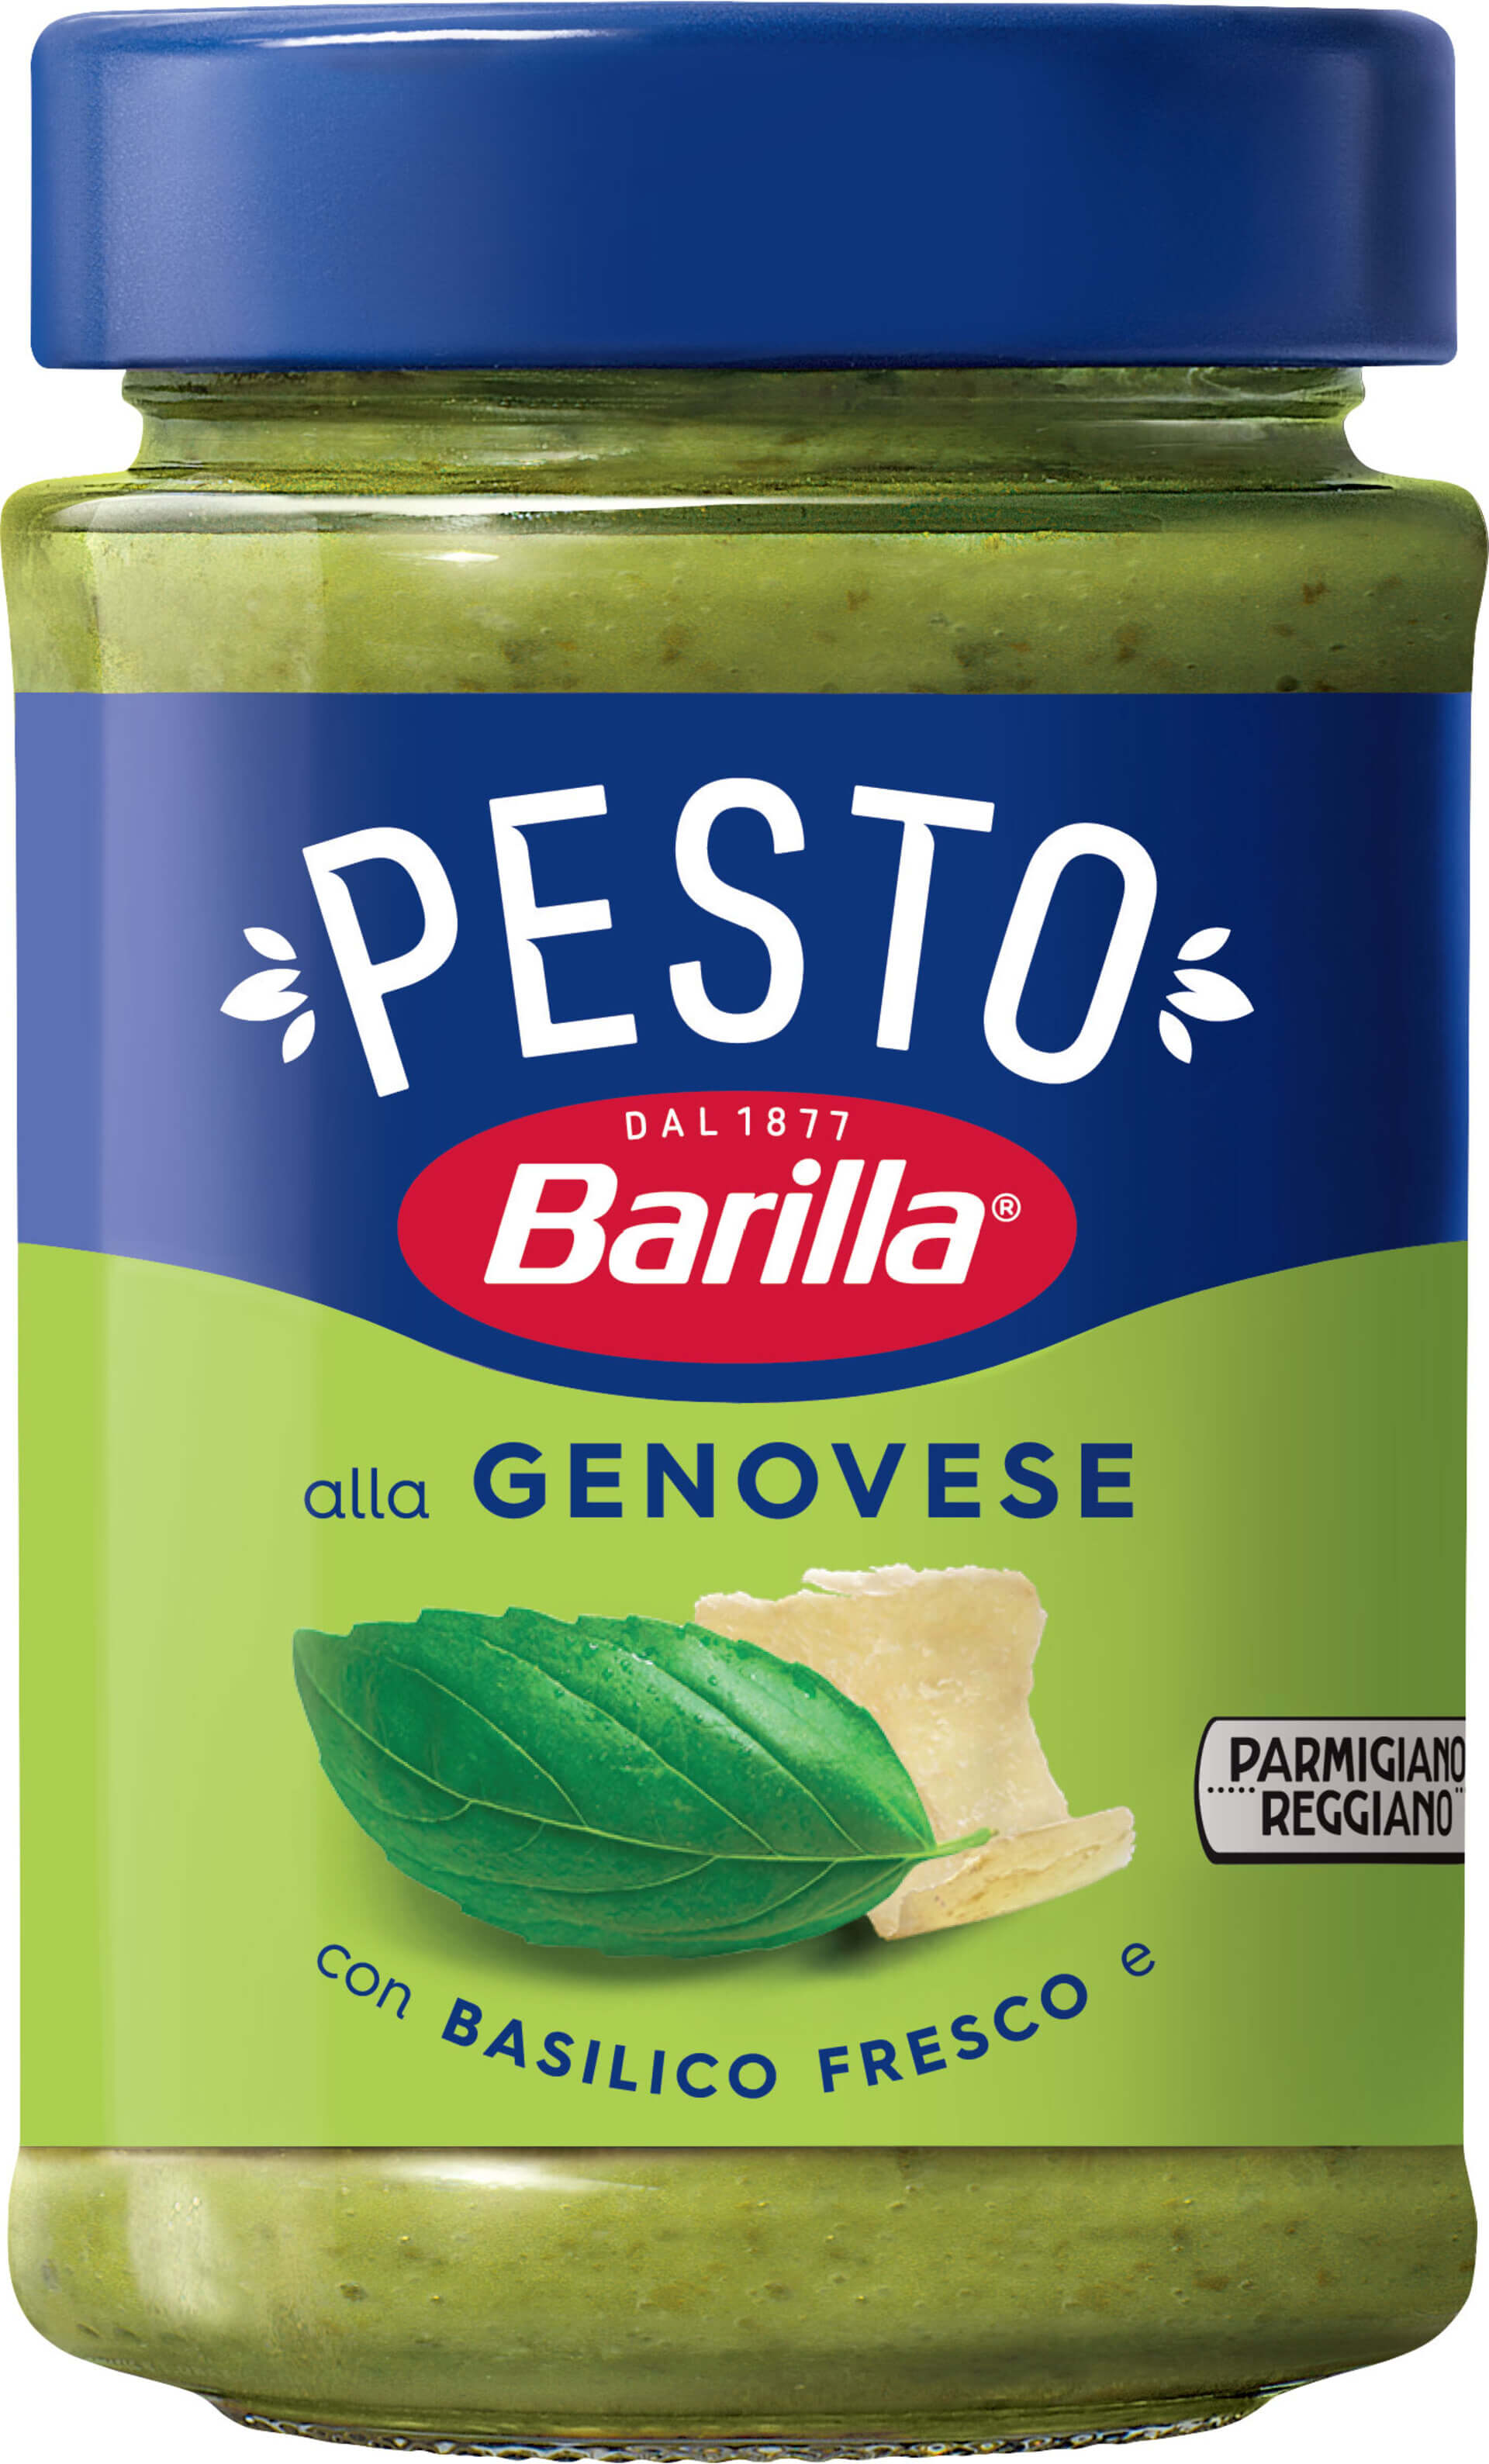 E-shop Barilla Pesto 190 g